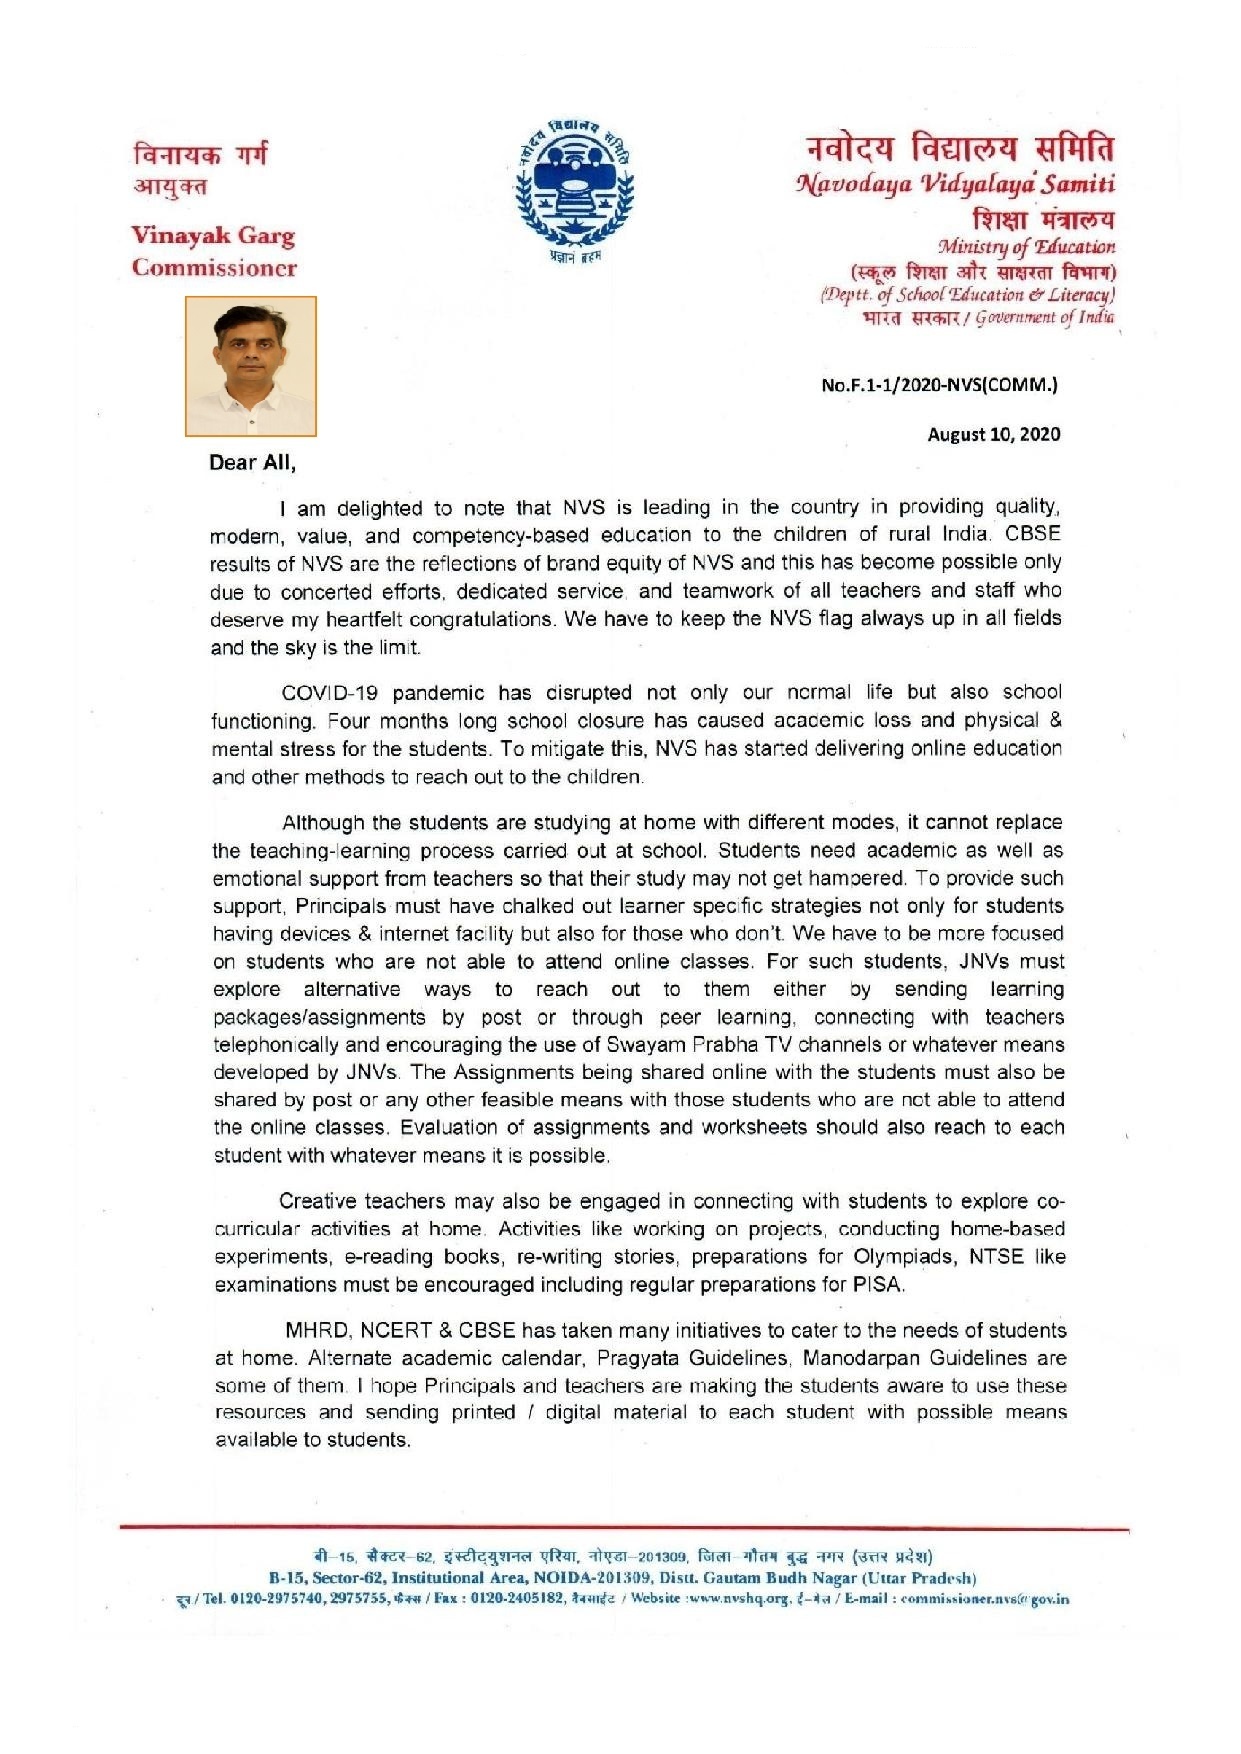 Shri Vinayak Garg, IRSEE (1995)   (Commissioner NVS)